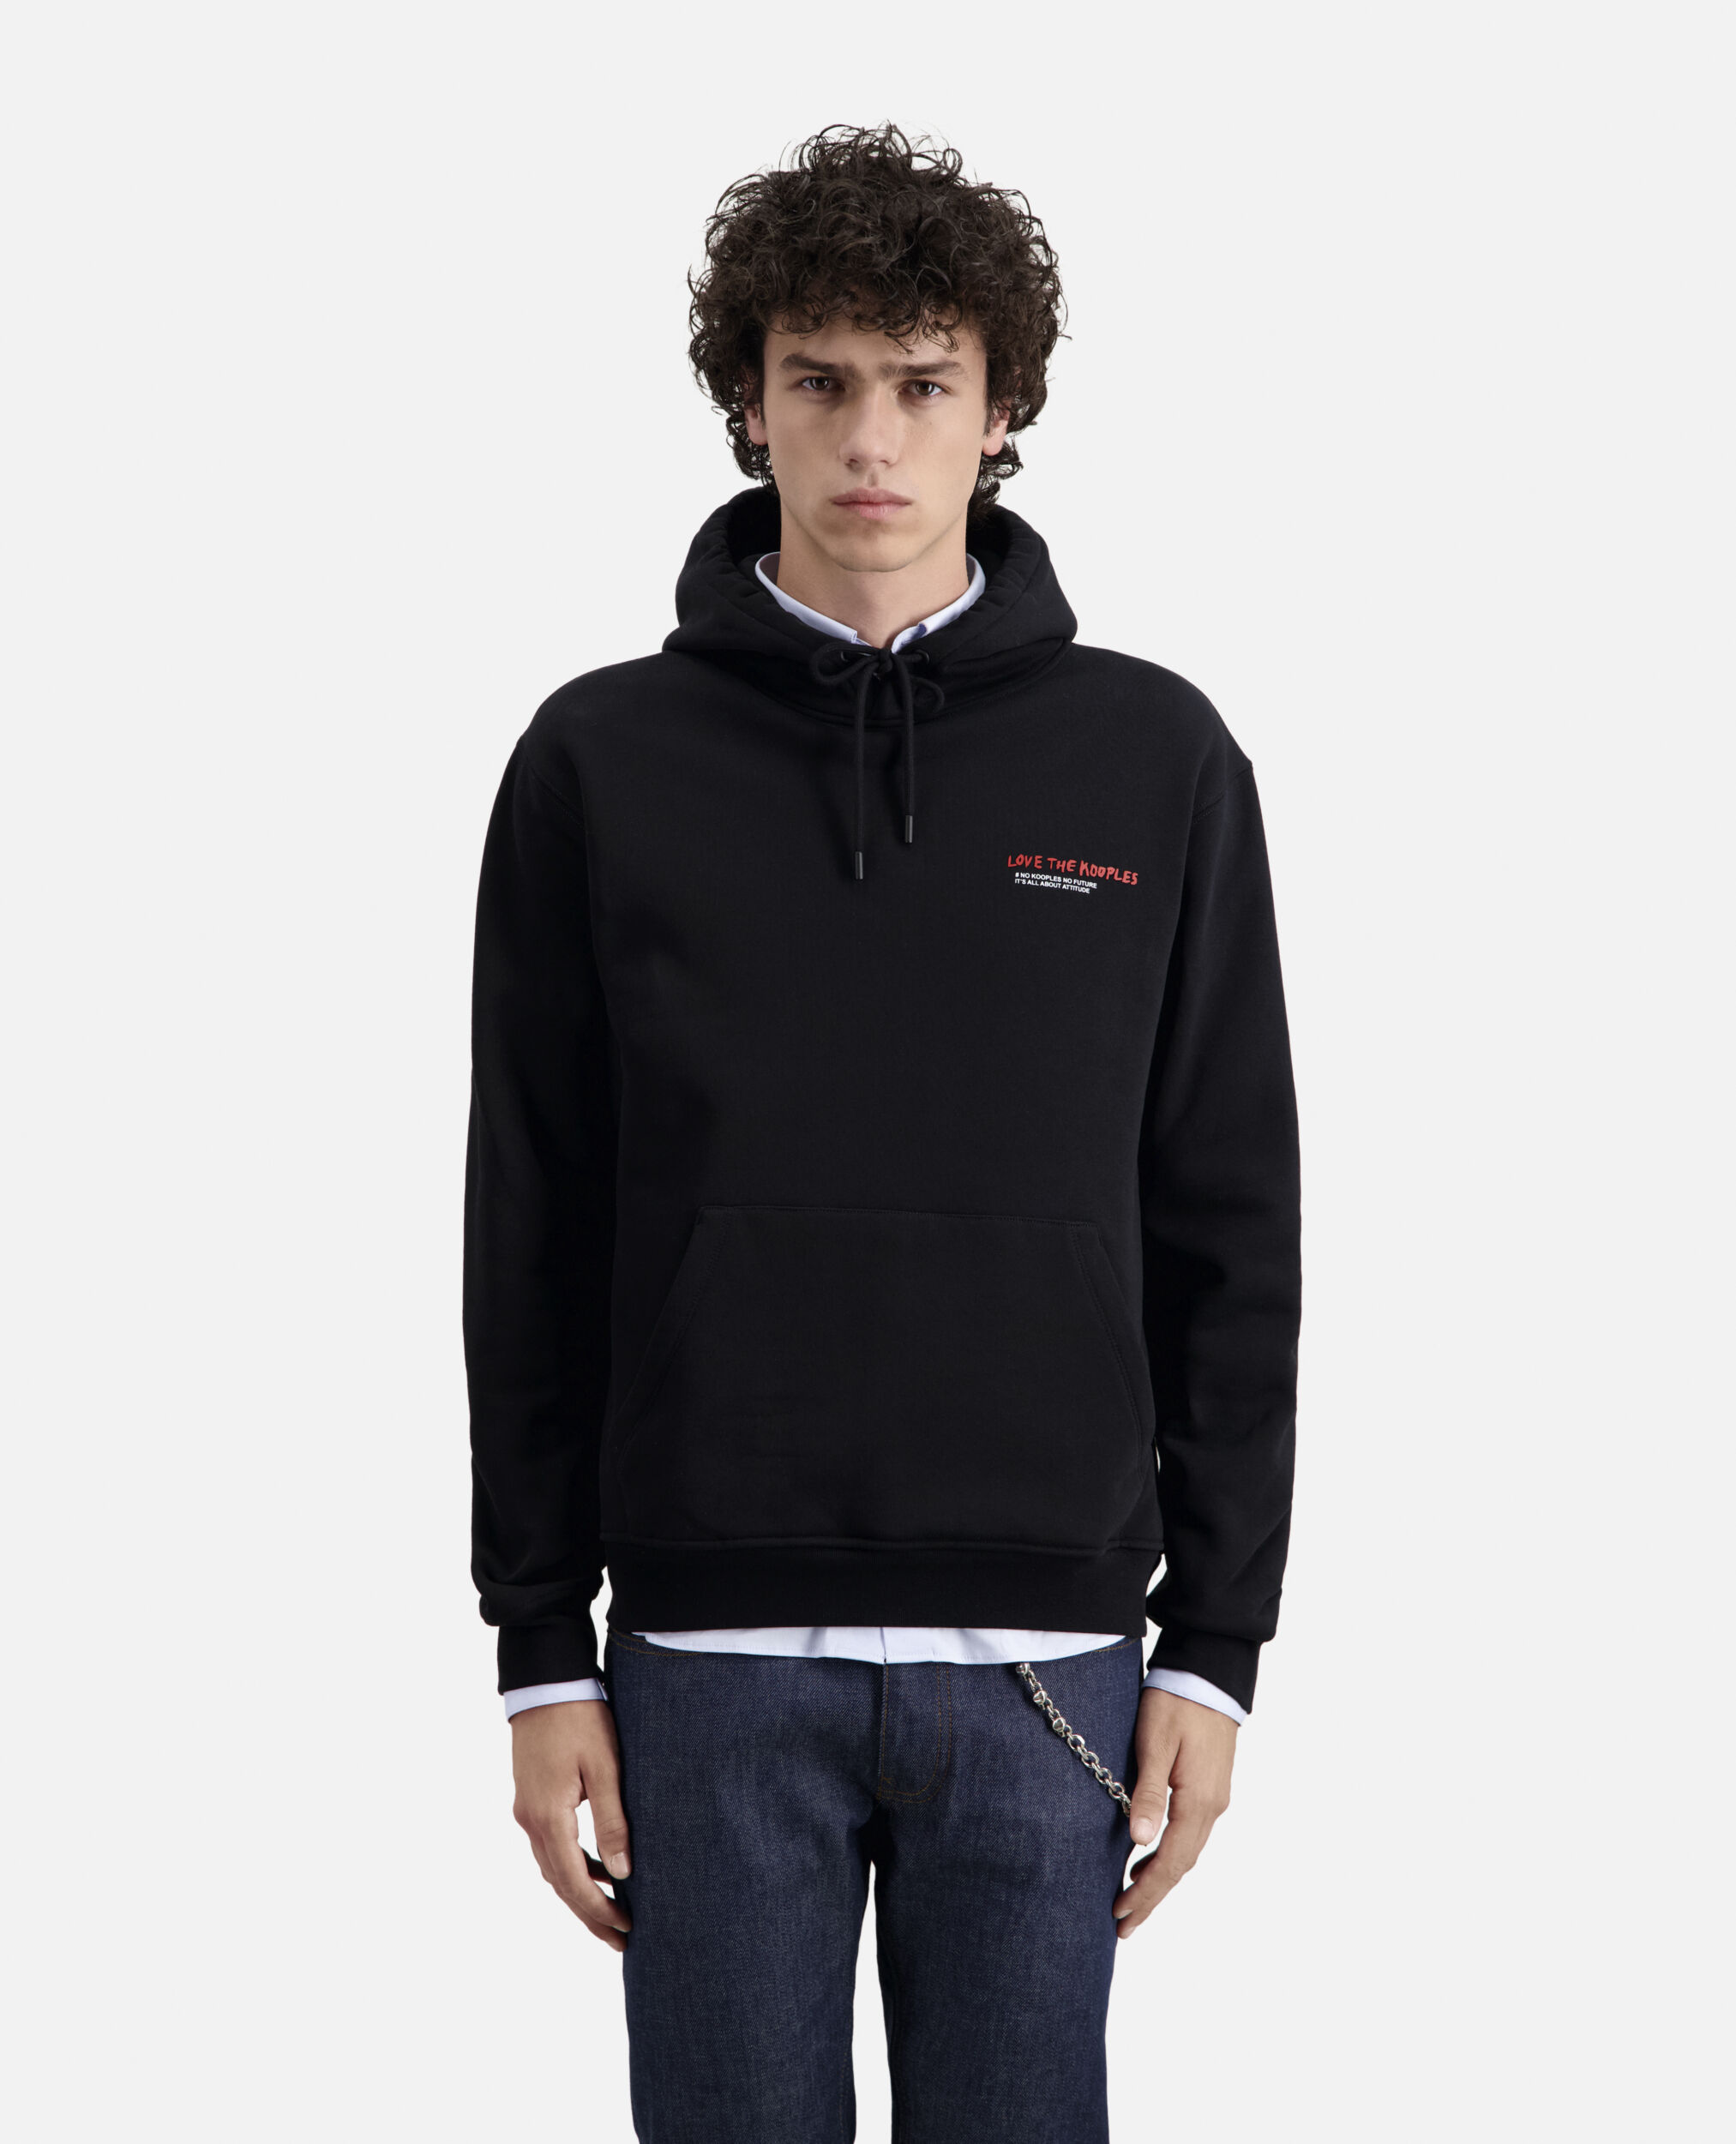 I Love Kooples black sweatshirt, BLACK, hi-res image number null